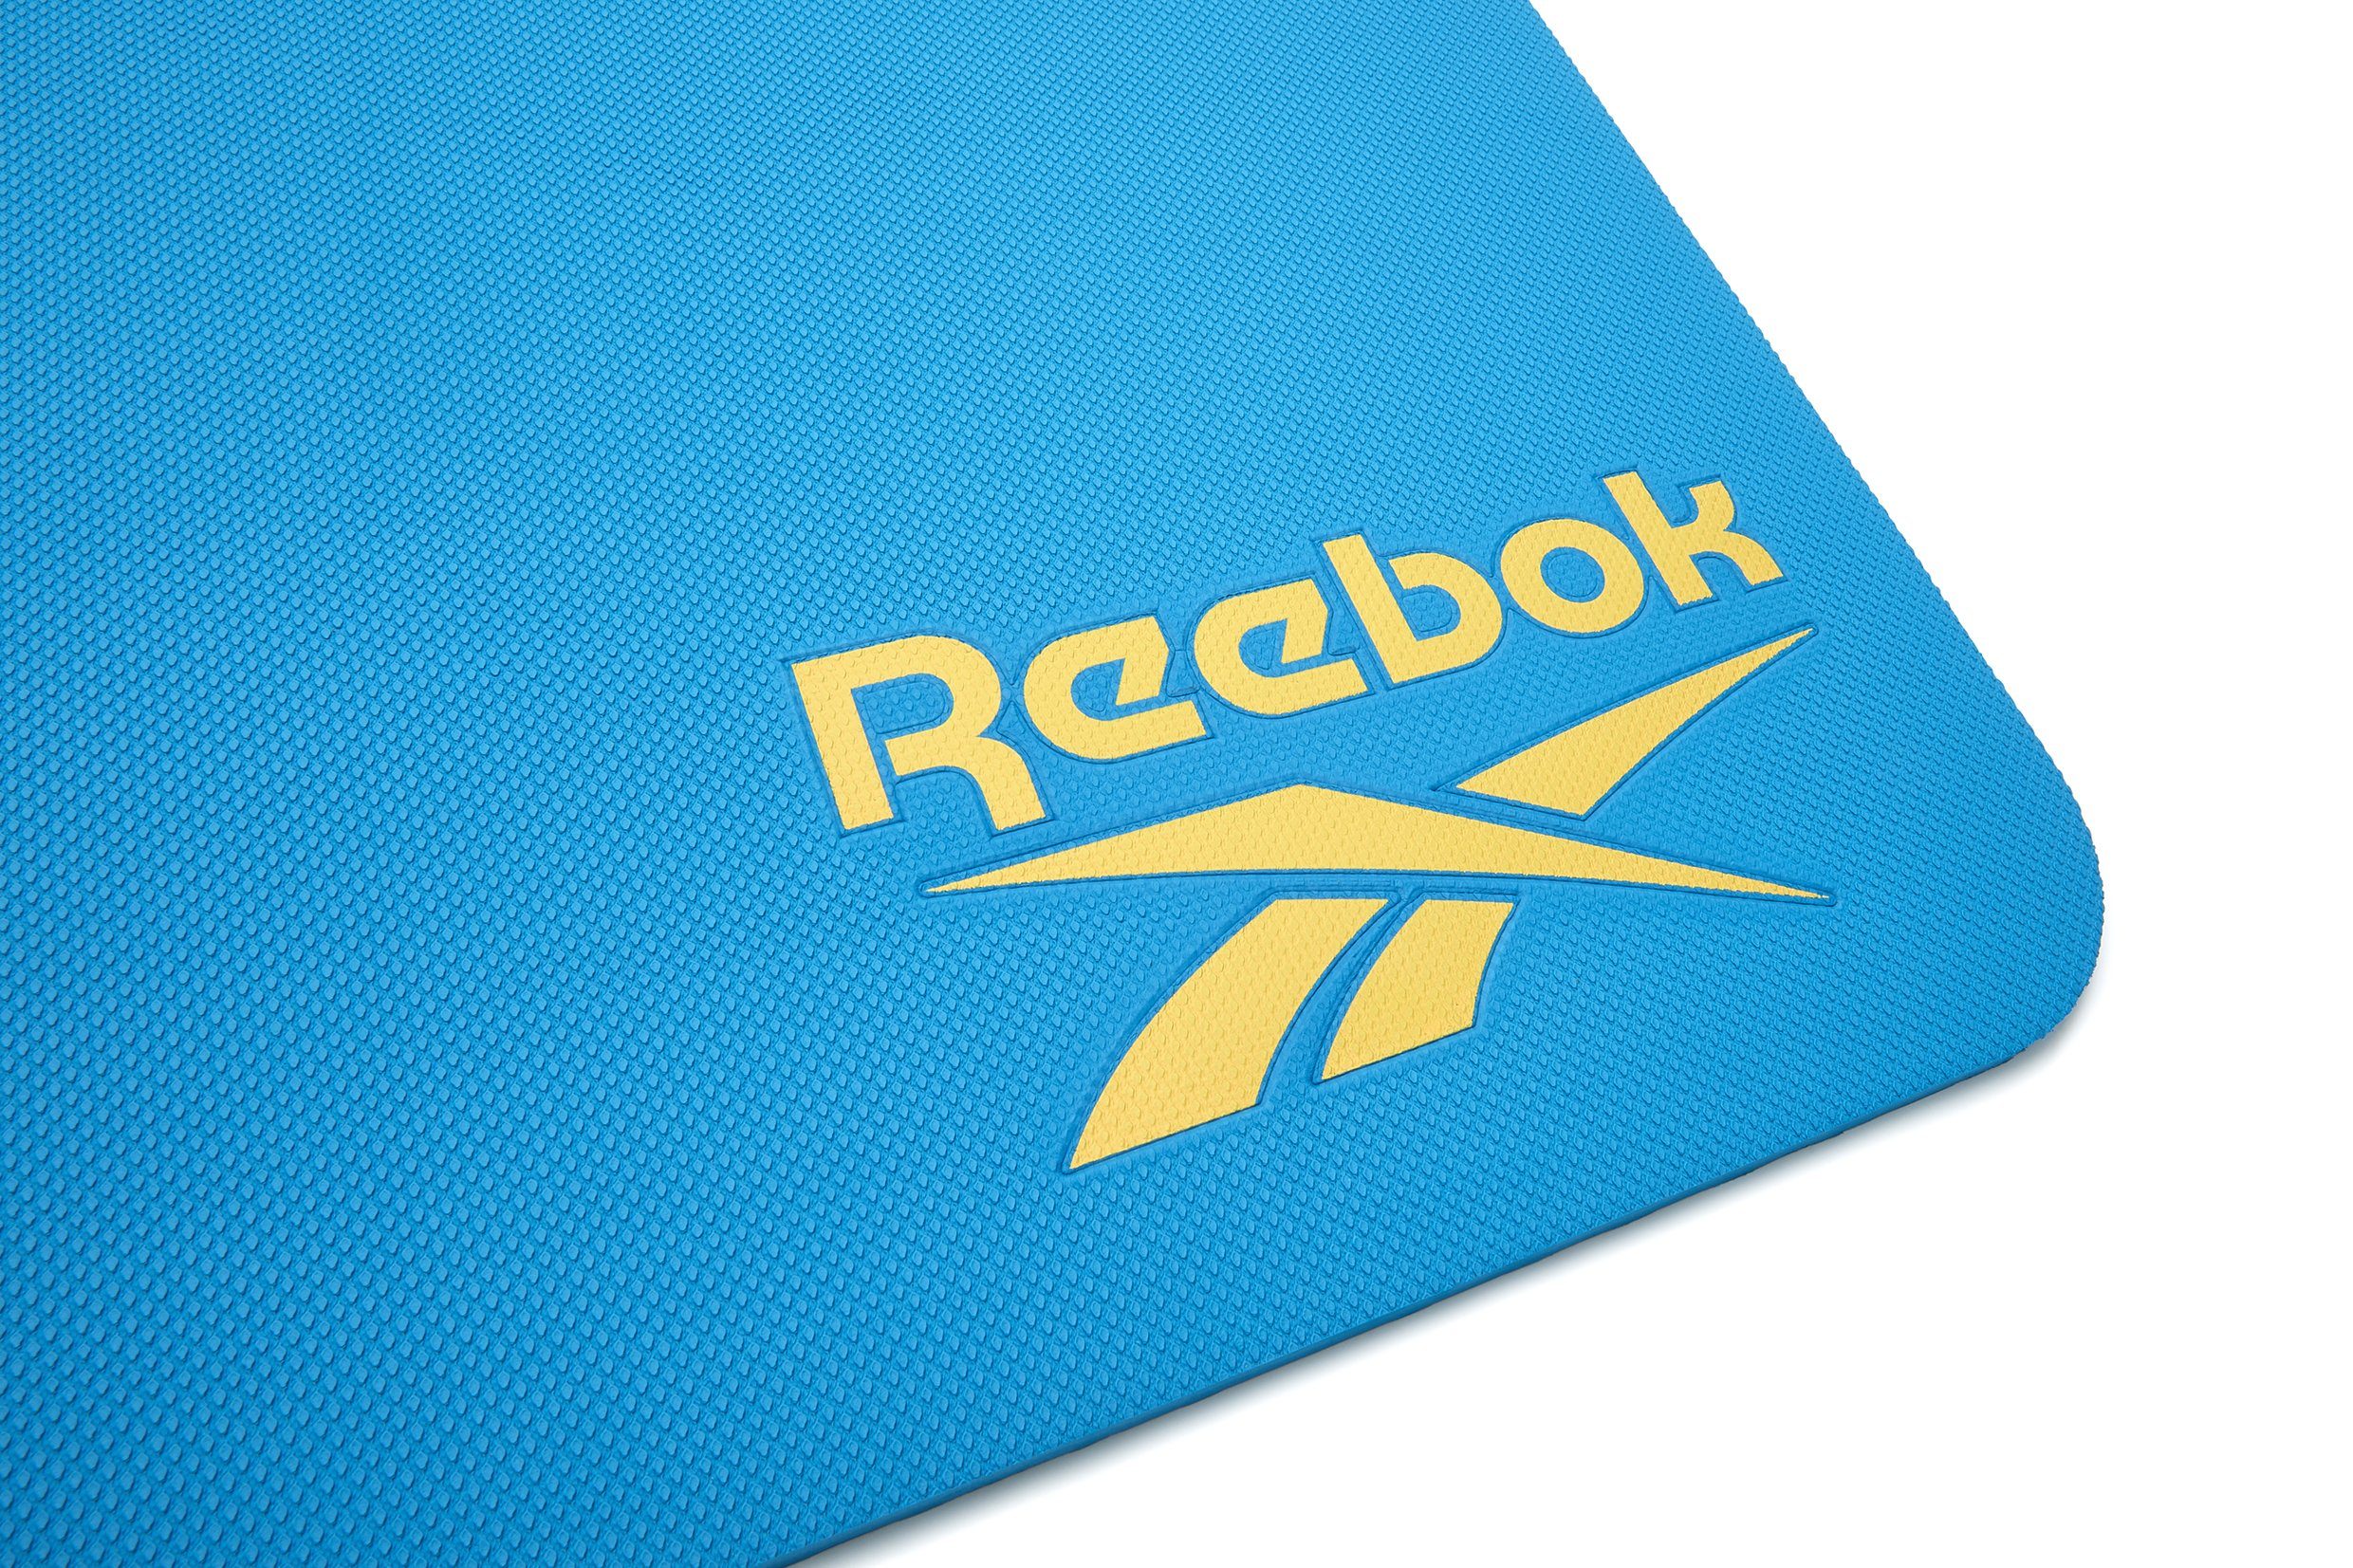 Reebok Fitnessmatte Reebok strapazierfähigem Blau, mit und Fitness-/Trainingsmatte 8mm, rutschfestem Performance, Material